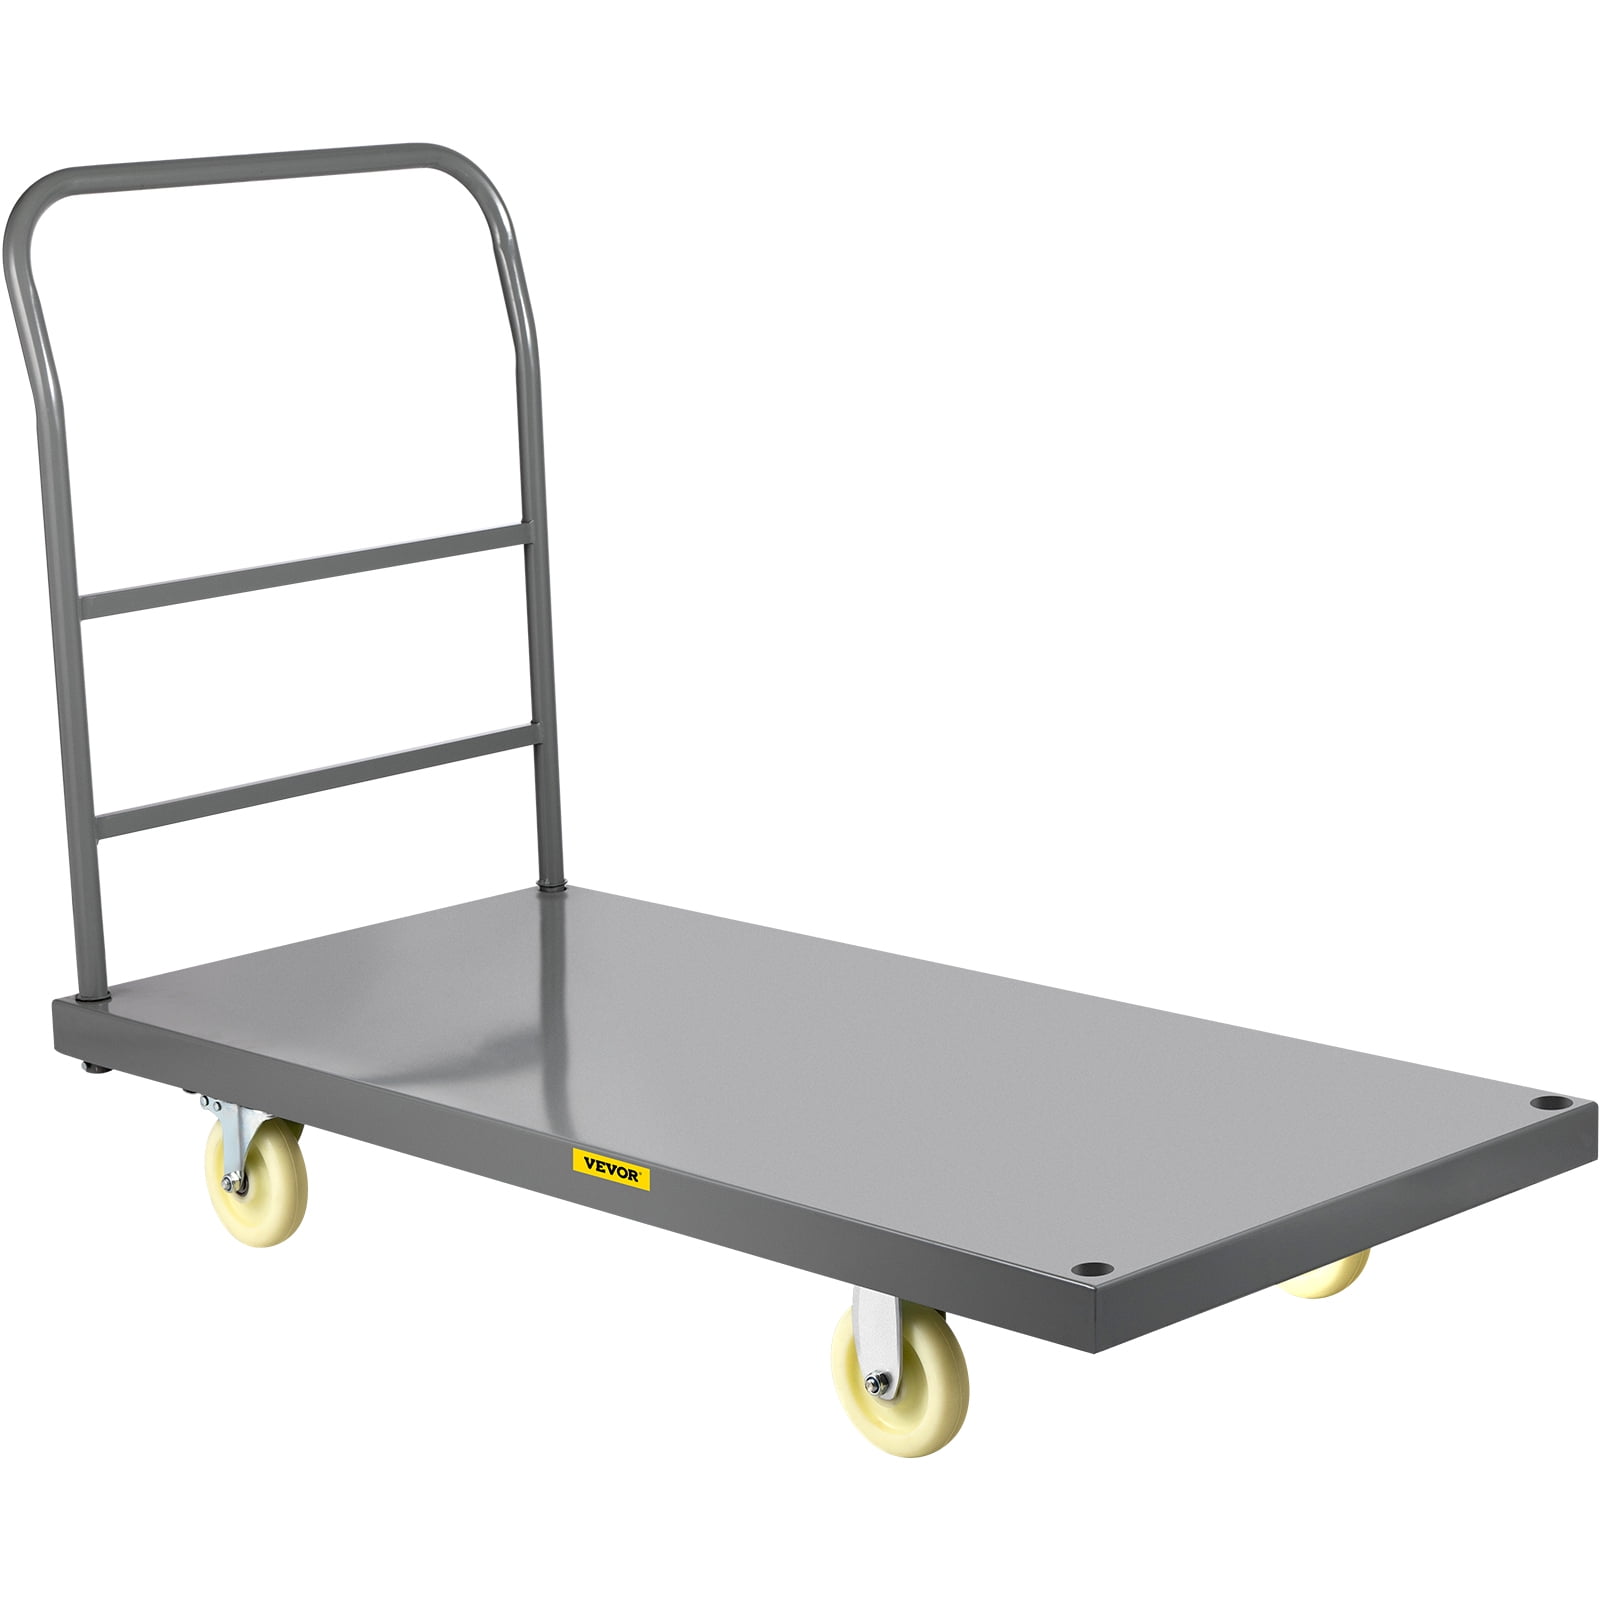 Heavy Duty Steel Flat Bed Cart - Polyurethane Wheels - Capacity: 2,000 lbs  - Deck LxW:: 60 x 30